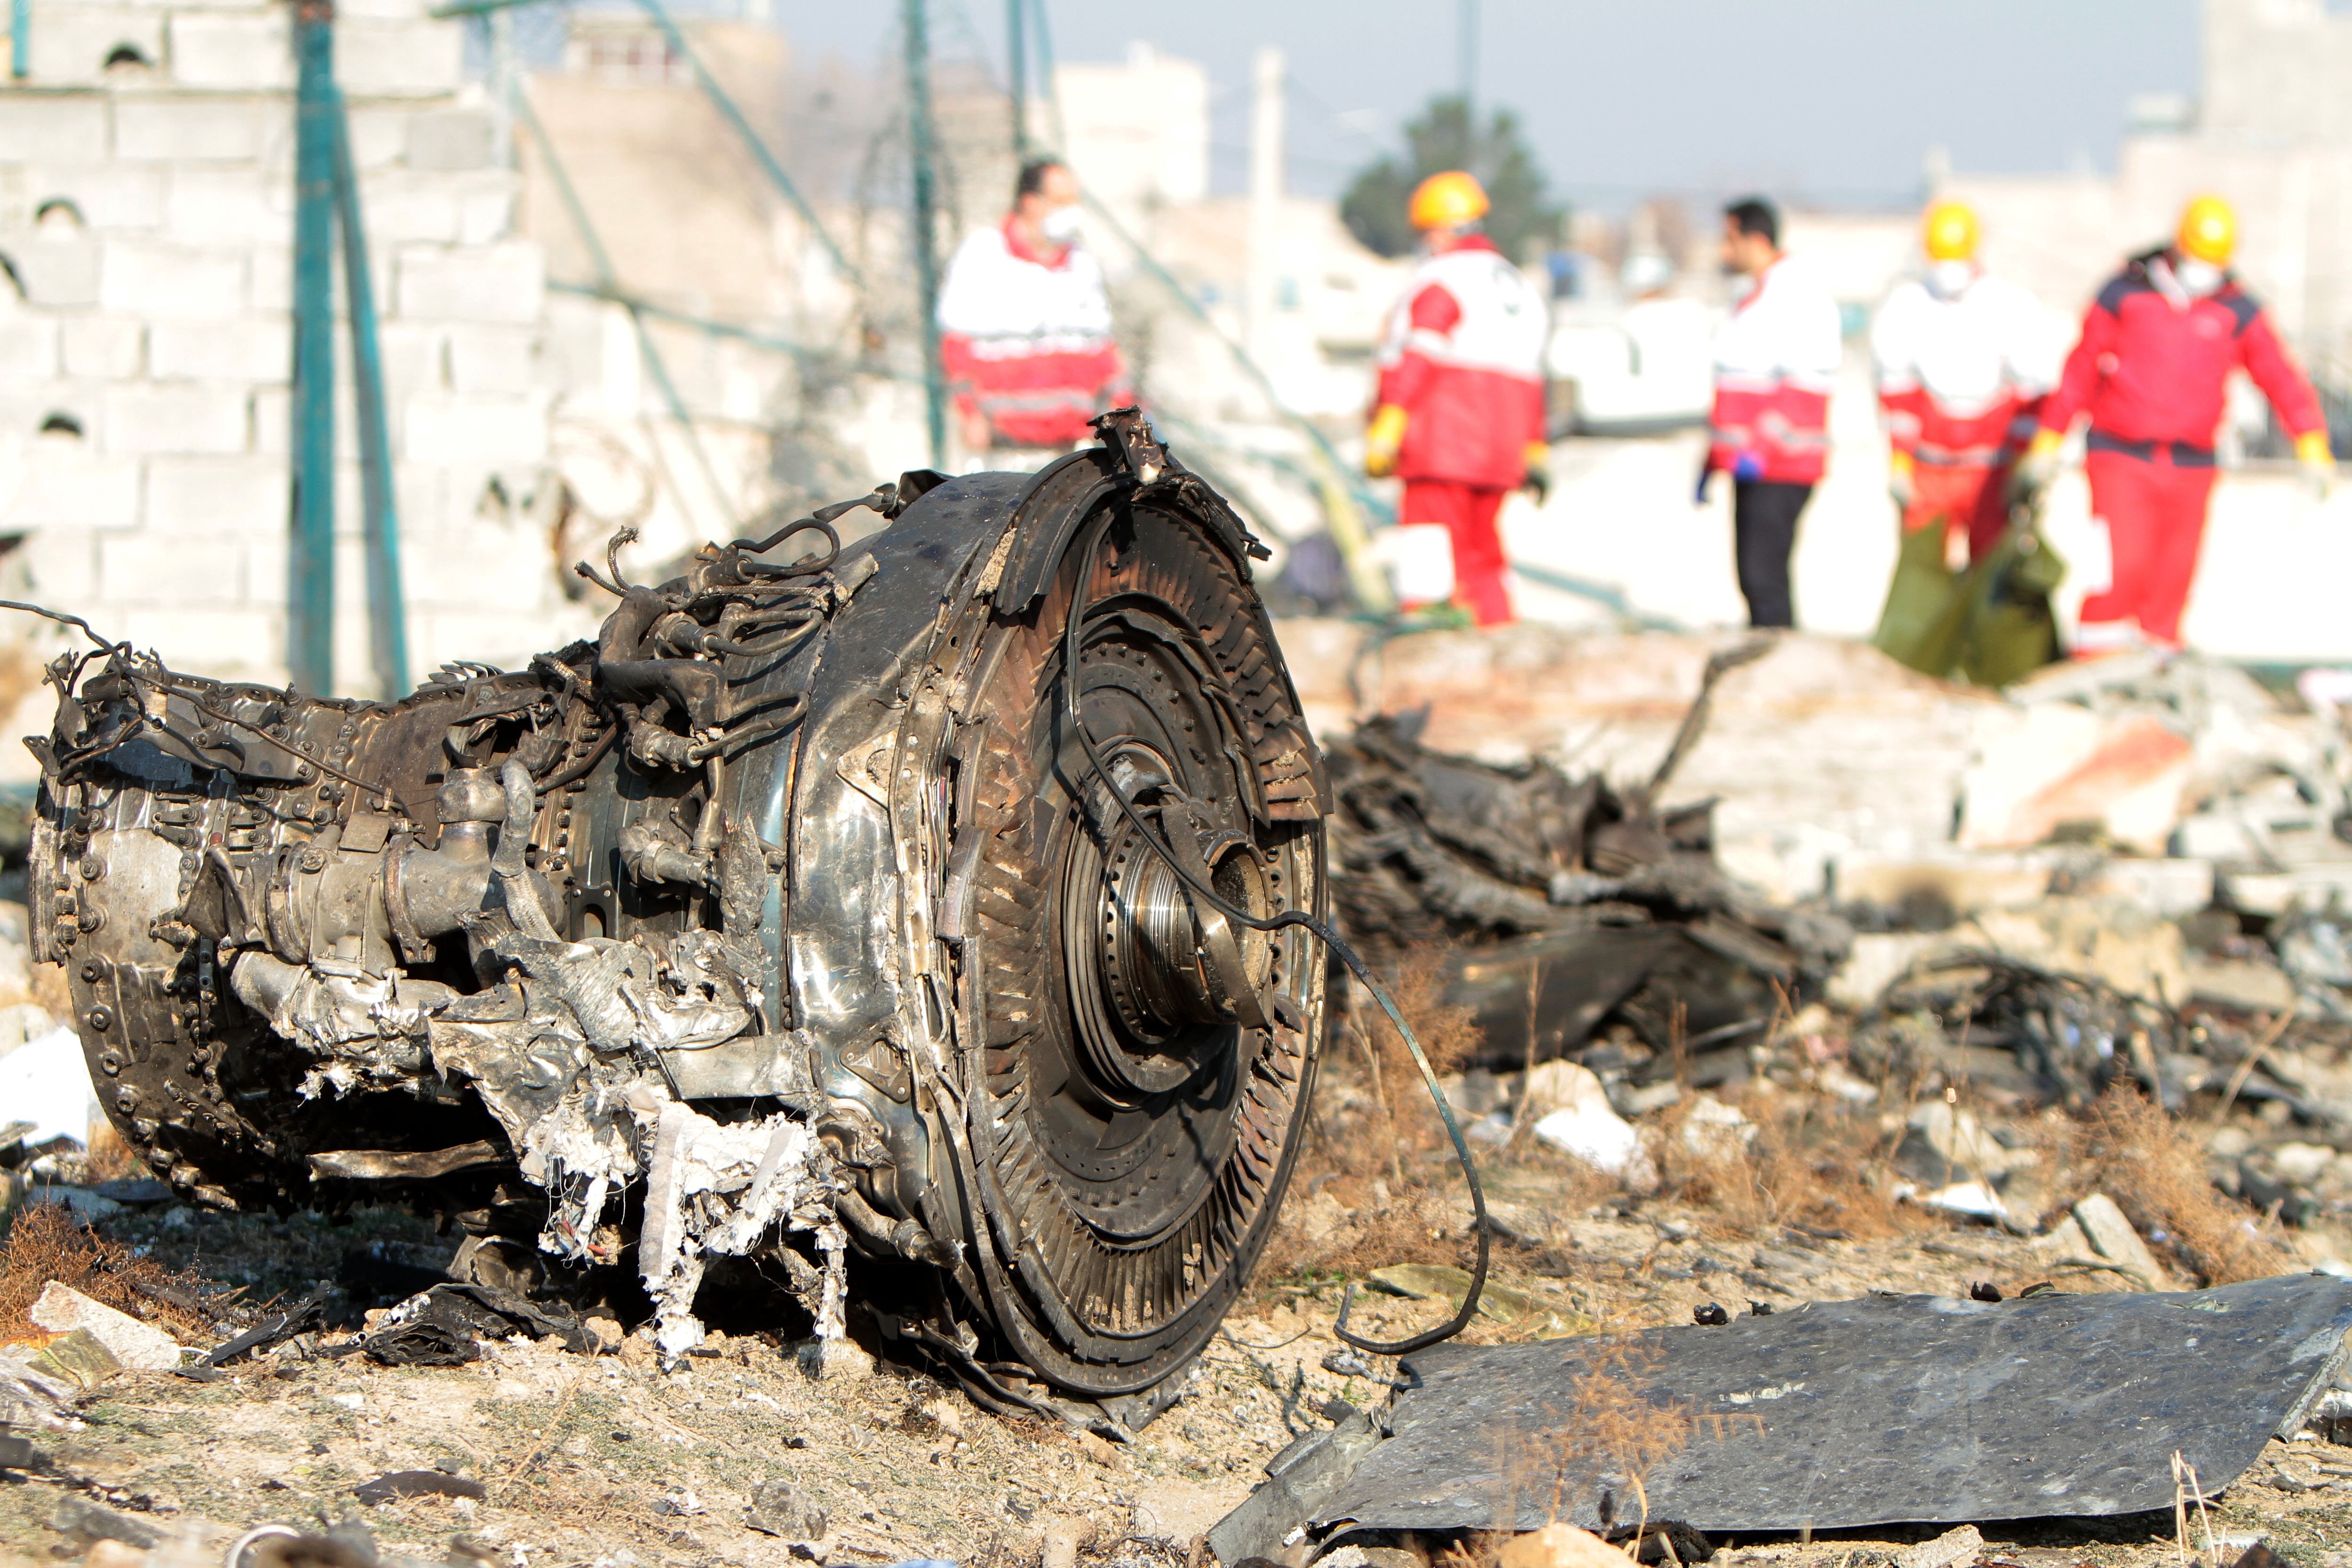 "Сердце снова остановилось": реакция родственников погибших рейса МН17 на сбивание самолета МАУ 